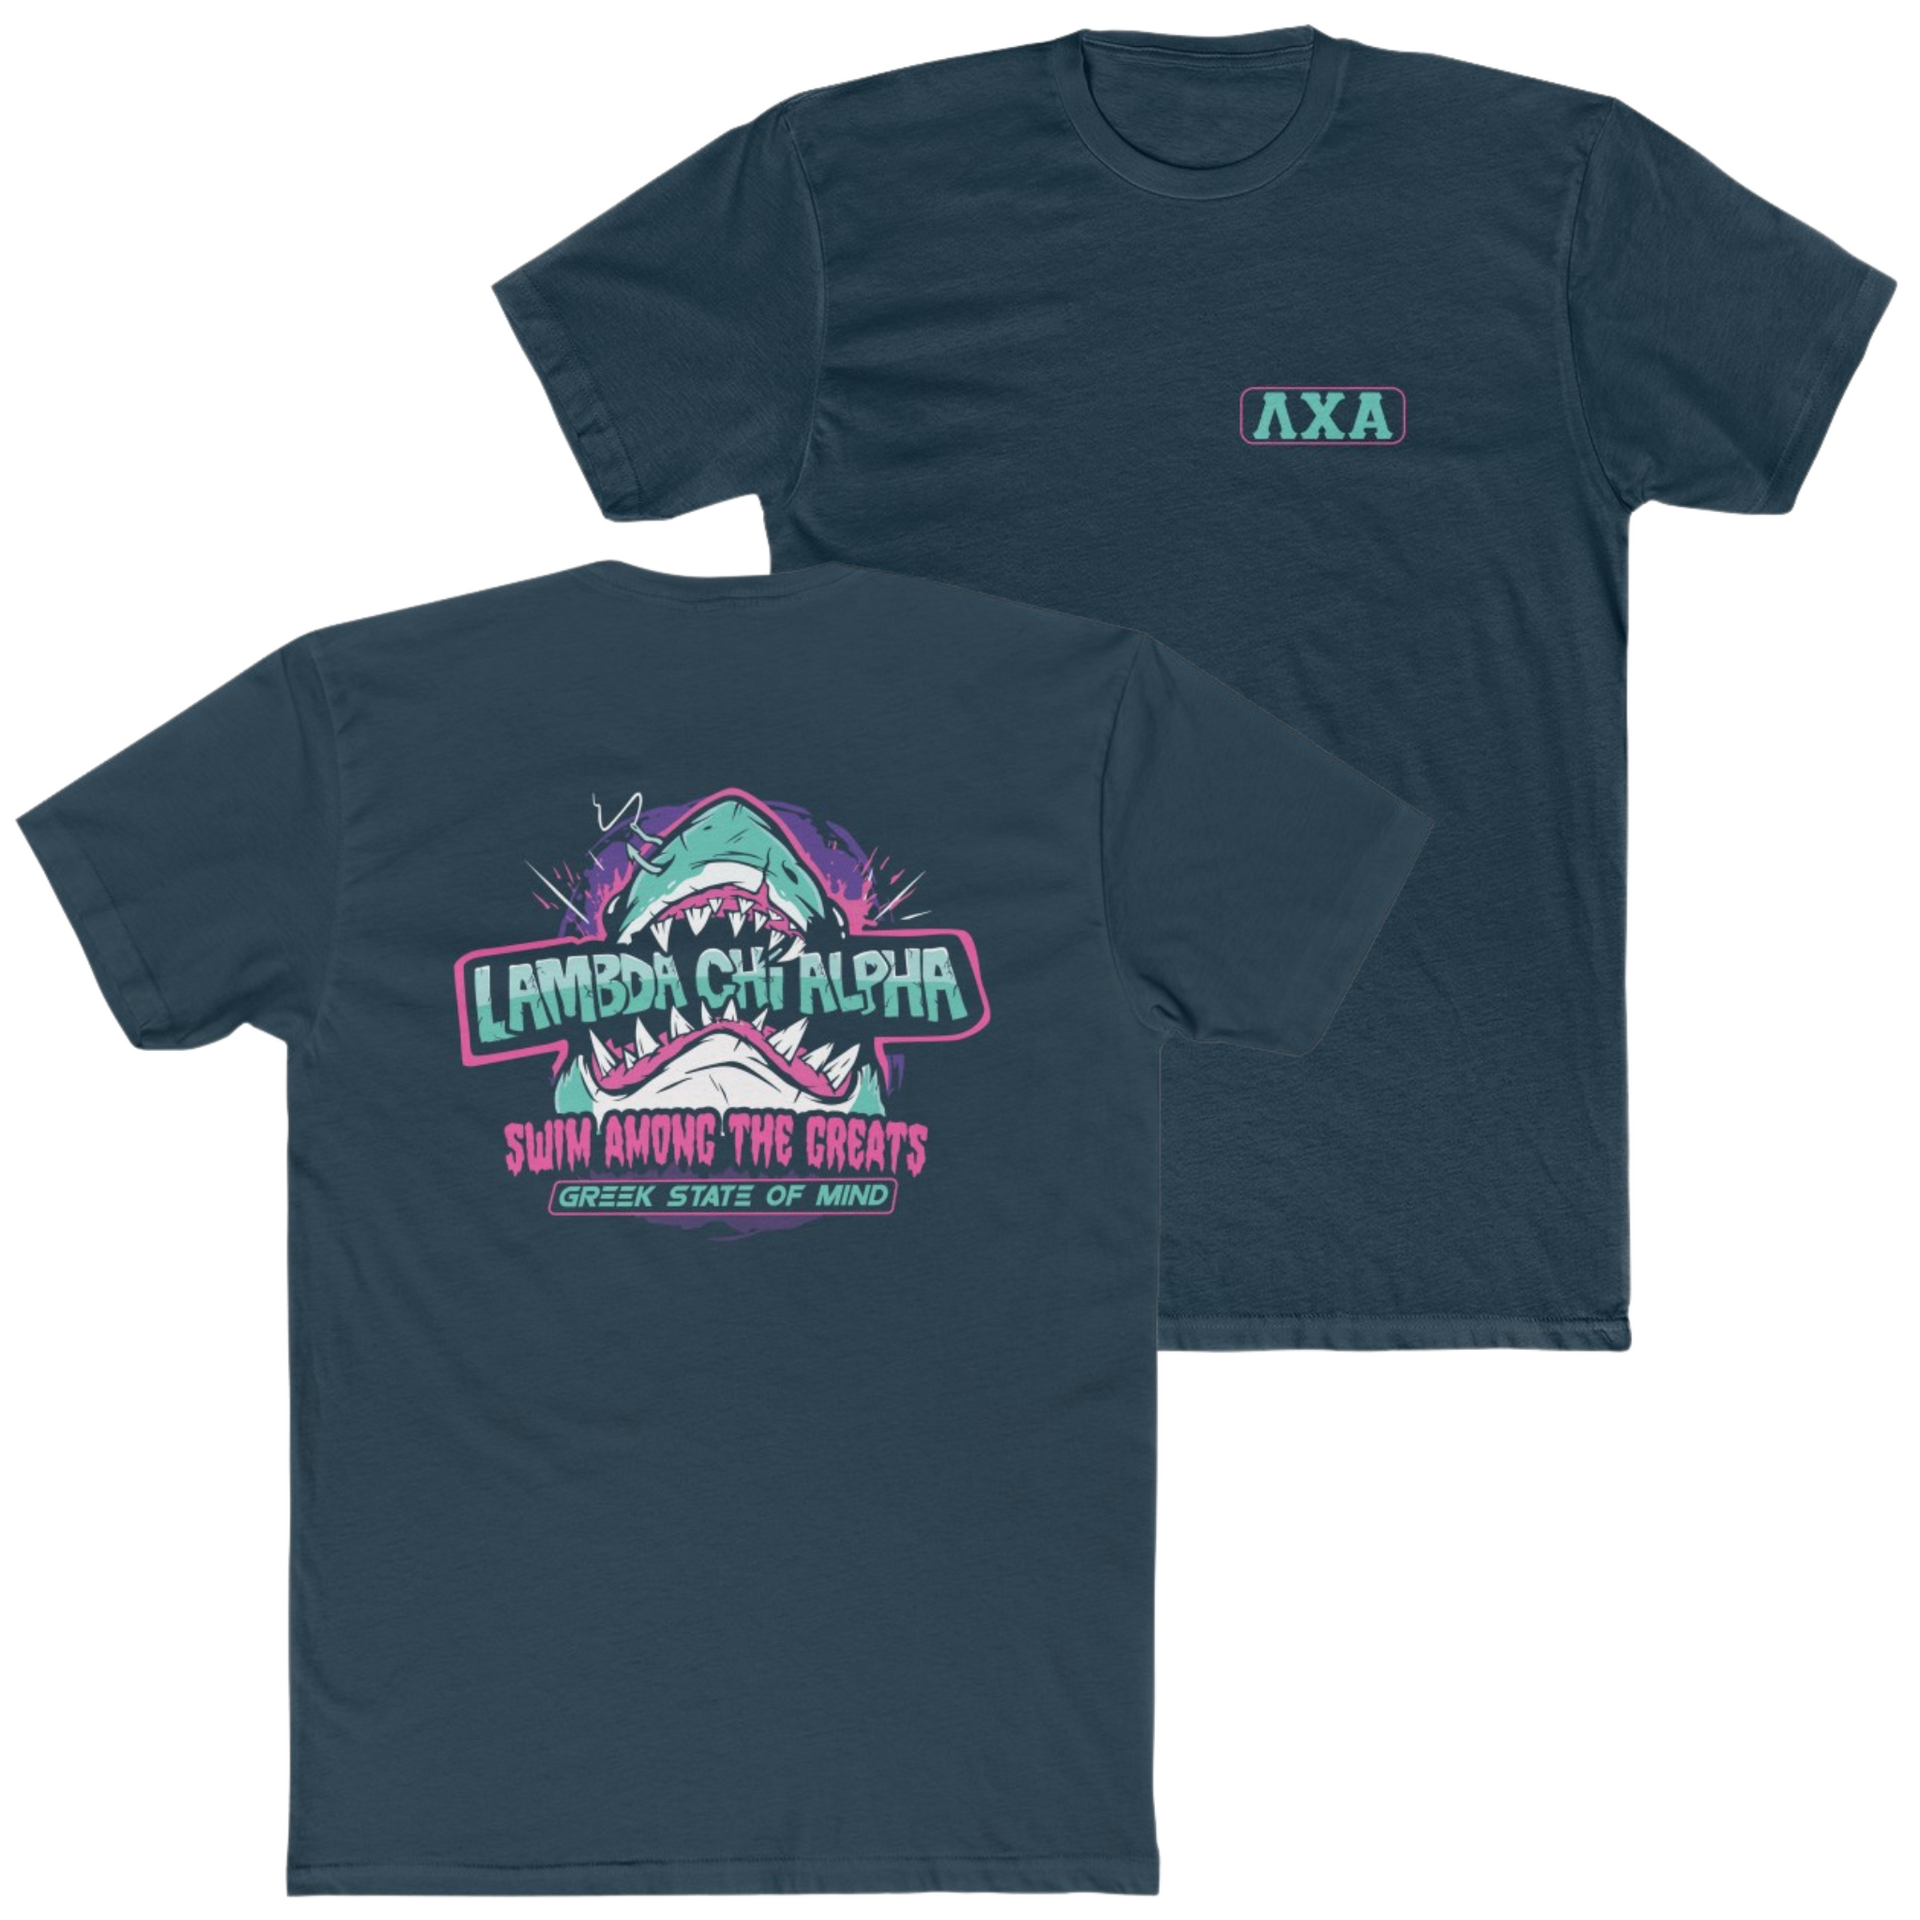 Navy Lambda Chi Alpha Graphic T-Shirt | The Deep End | Lambda Chi Alpha Fraternity Shirt 